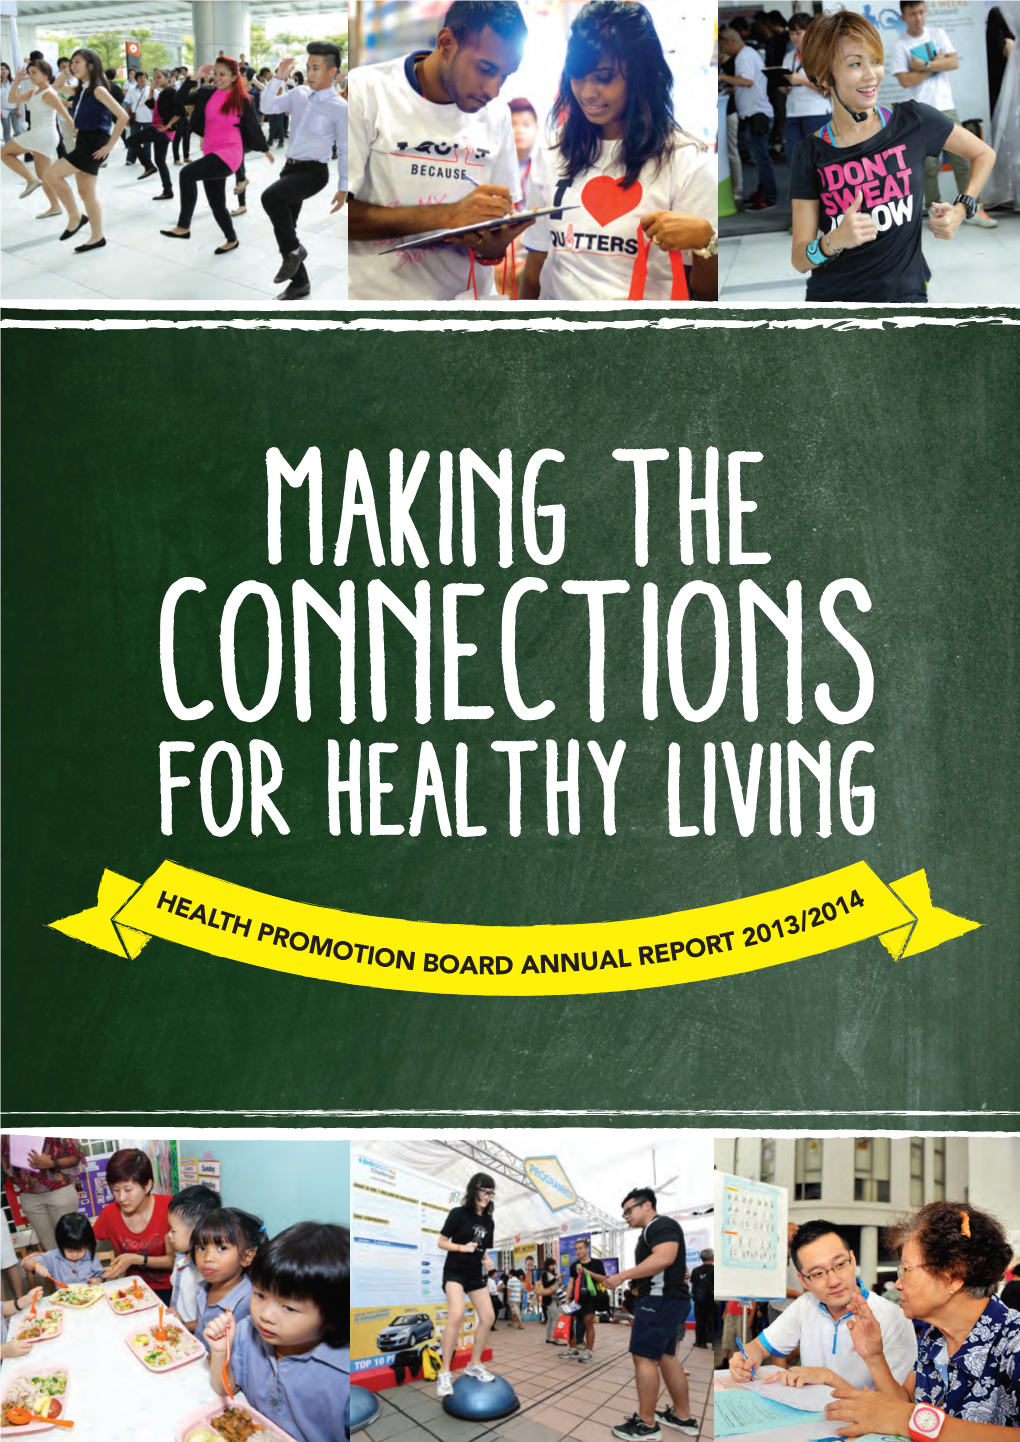 Health Promotion Board Annual Report 2013/2014